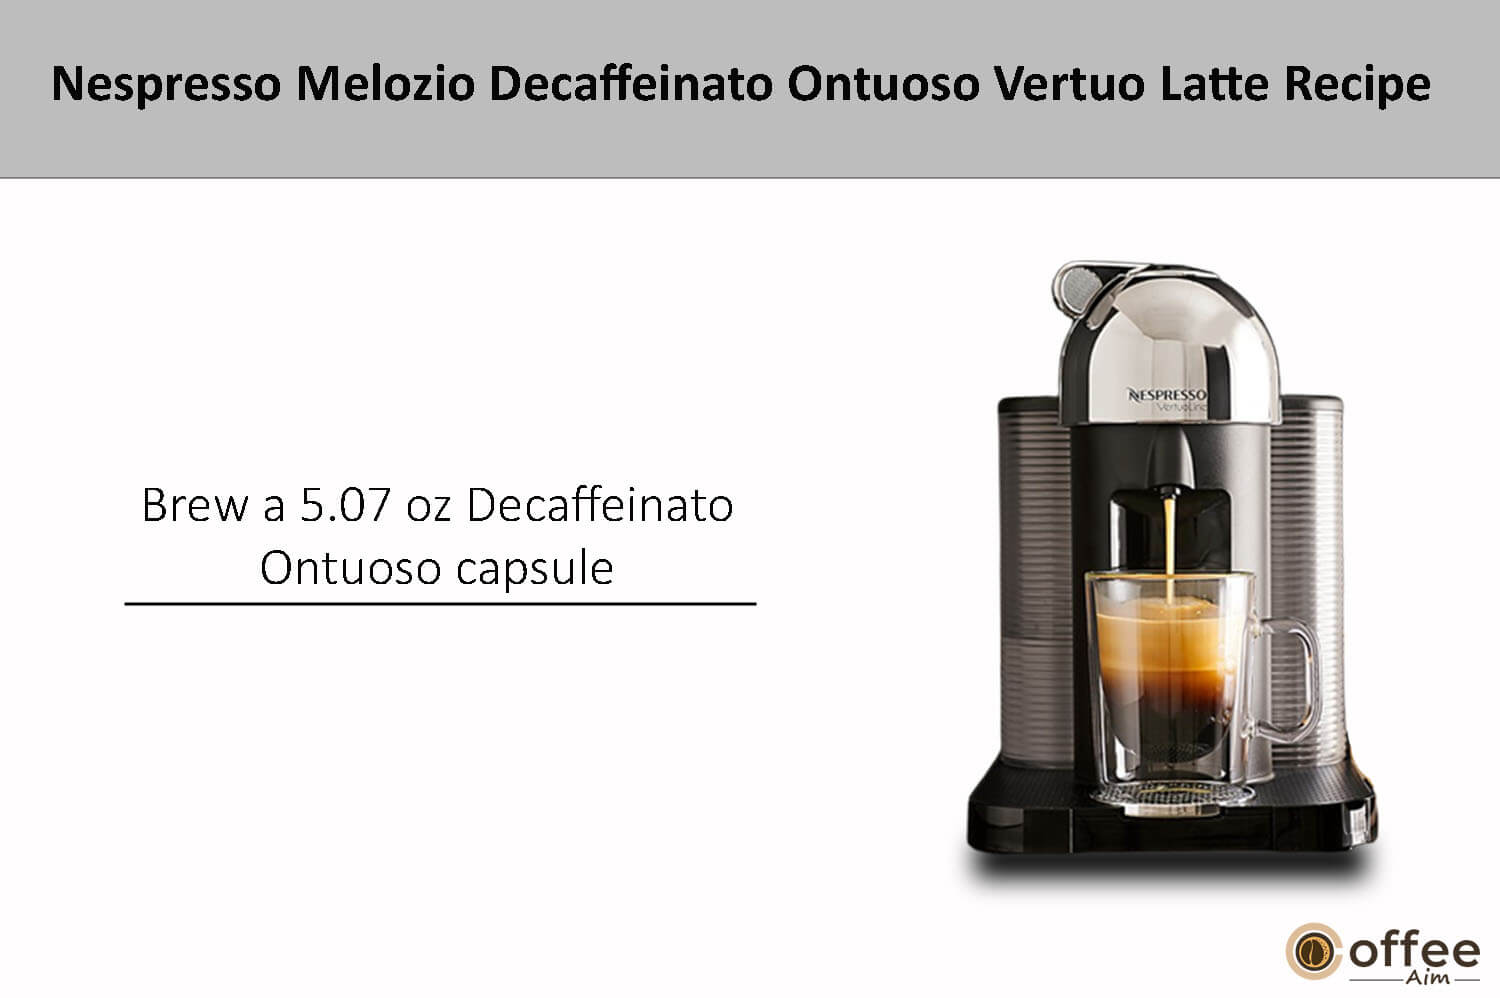 In this image i explain extract the 5.07 oz decaffeinato ontuoso capsule with your nespresso vertuoLine machine in the coffee mug.